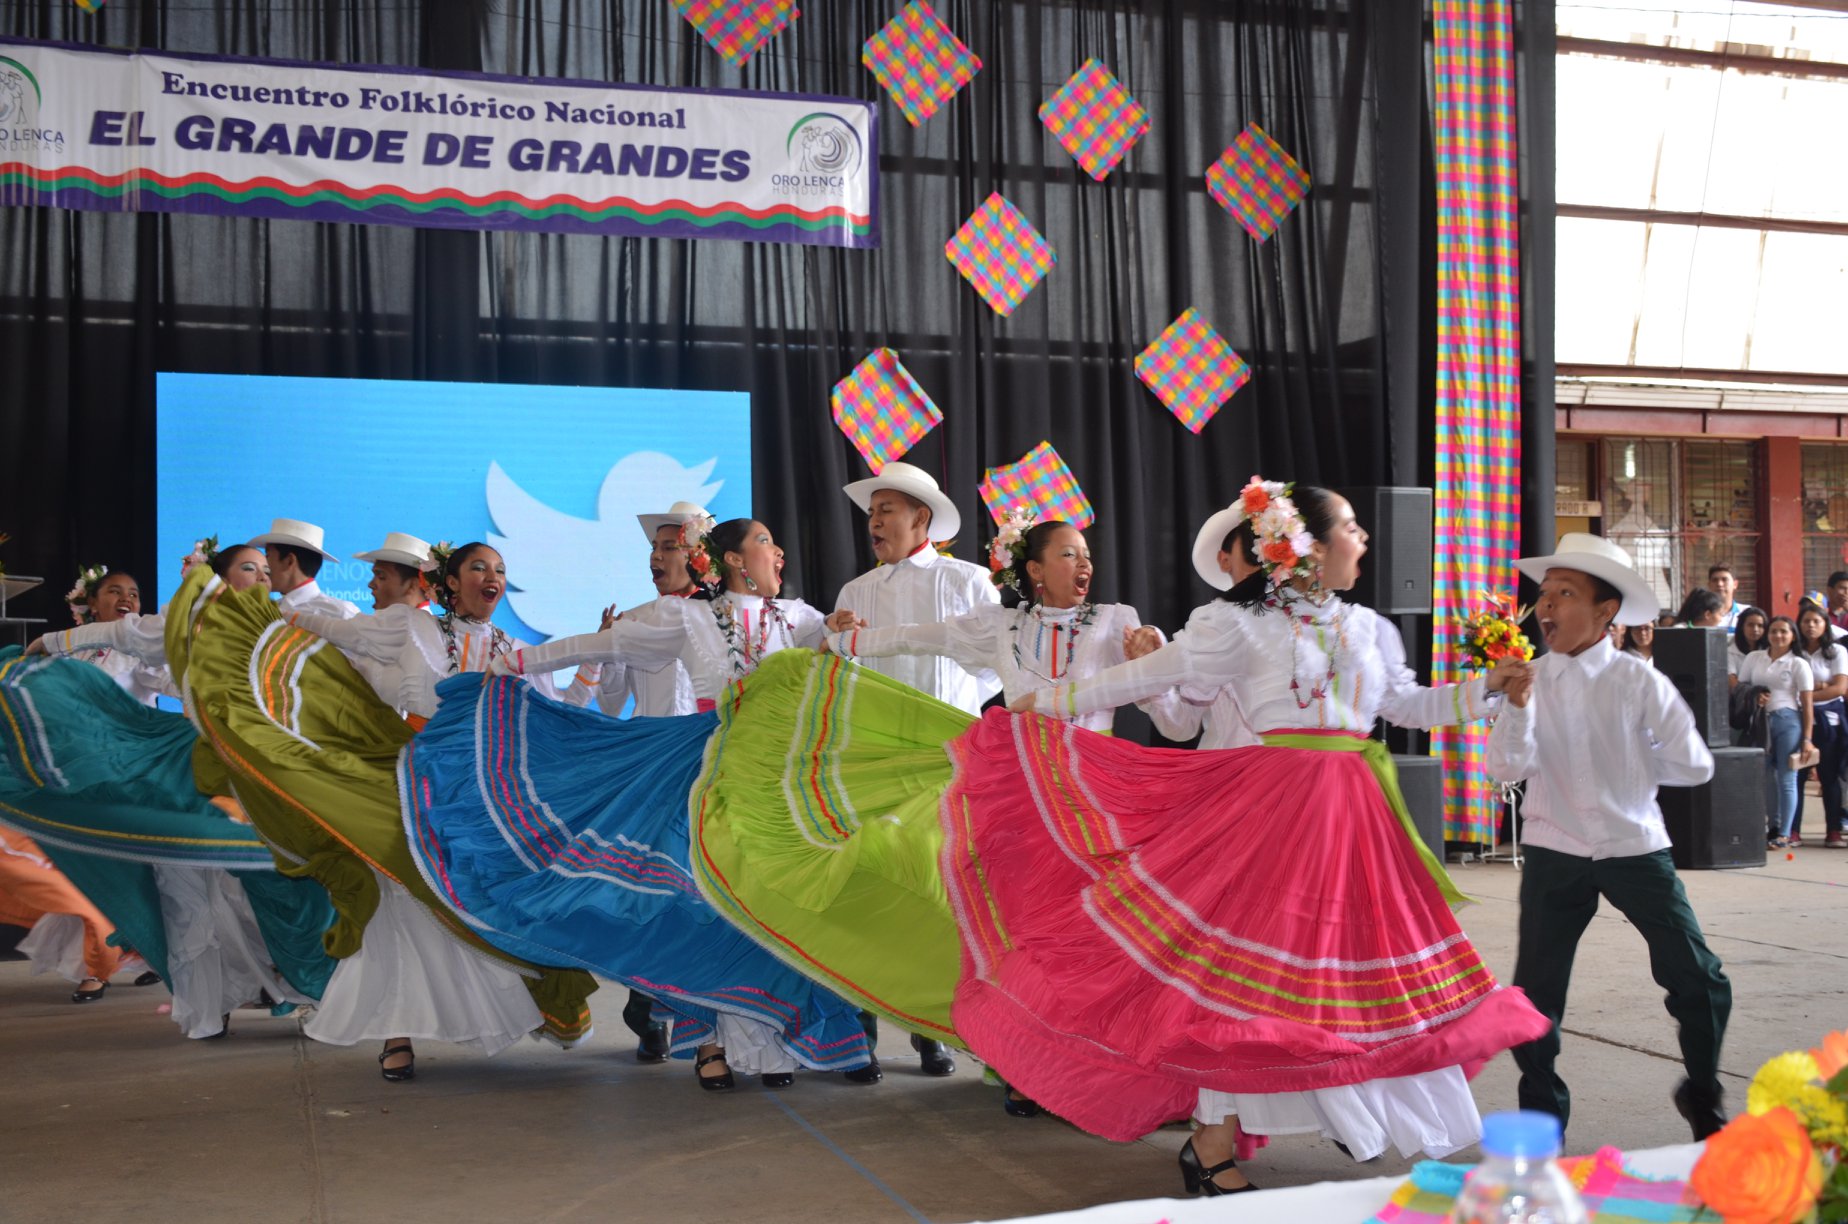 Dancers from the Instituto Marista La Inmaculada in El Grande de Grandes VIII 2018